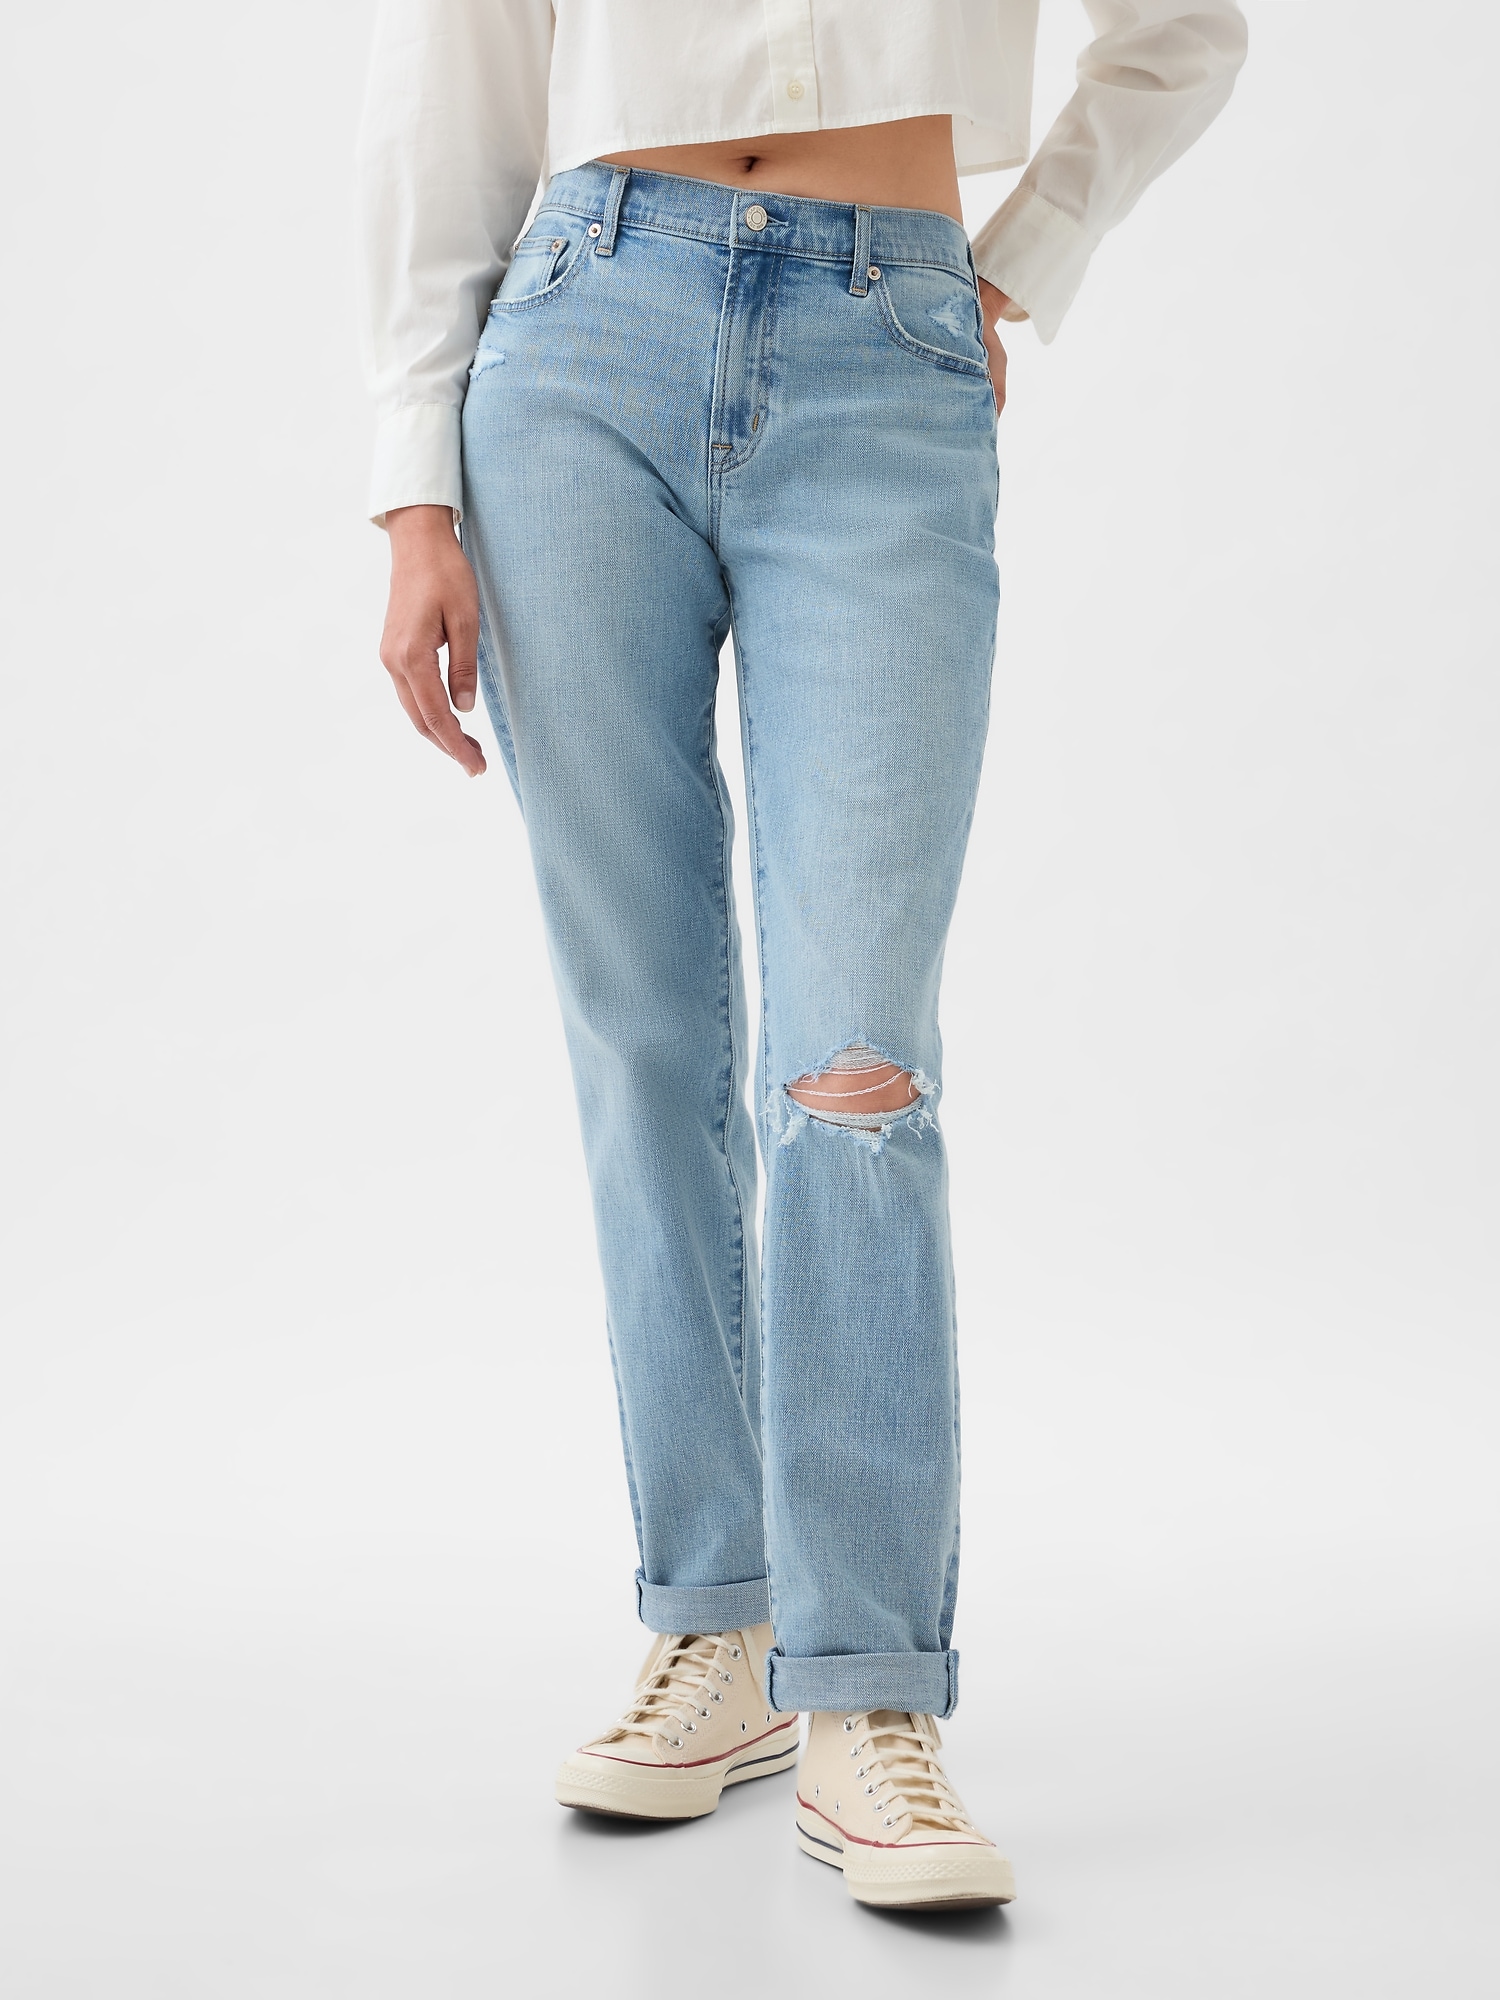 Mid Rise Girlfriend Jeans